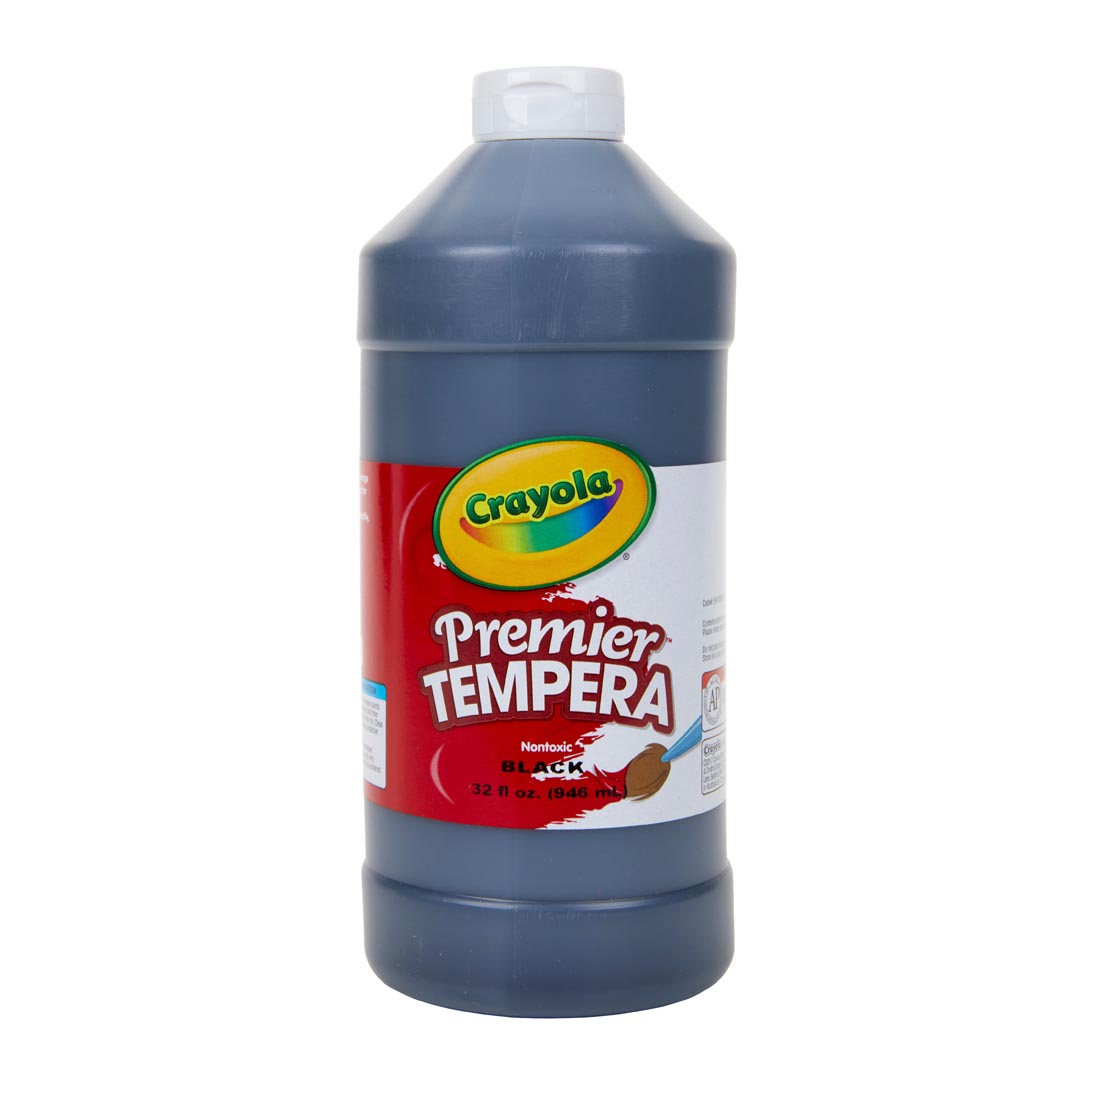 Bottle of Black Crayola Premier Tempera Paint